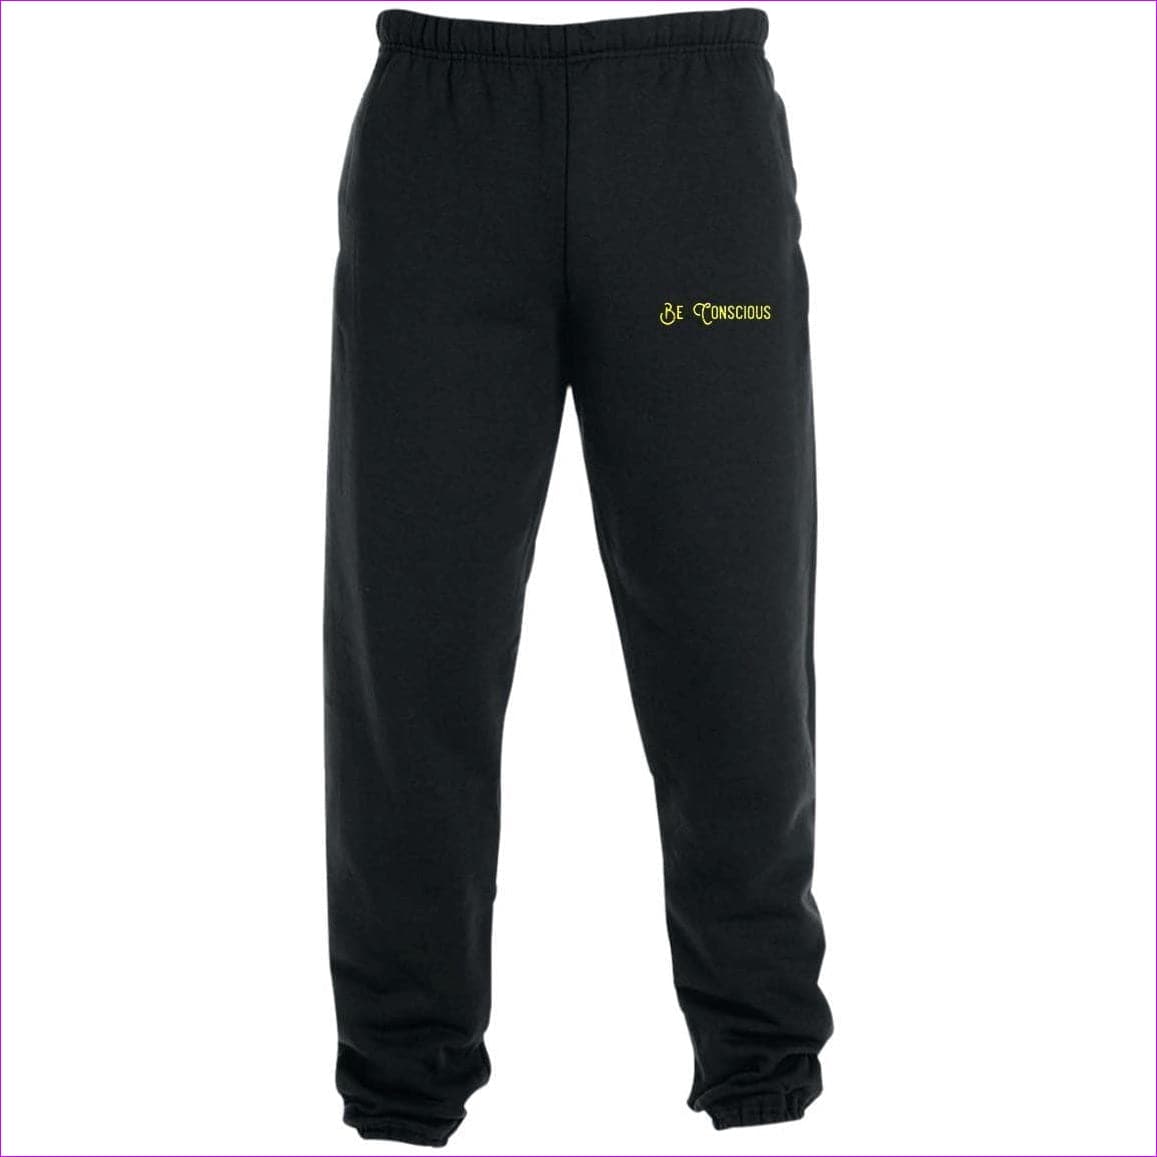 Black Be Conscious Sweatpants with Pockets - men's sweatpants at TFC&H Co.